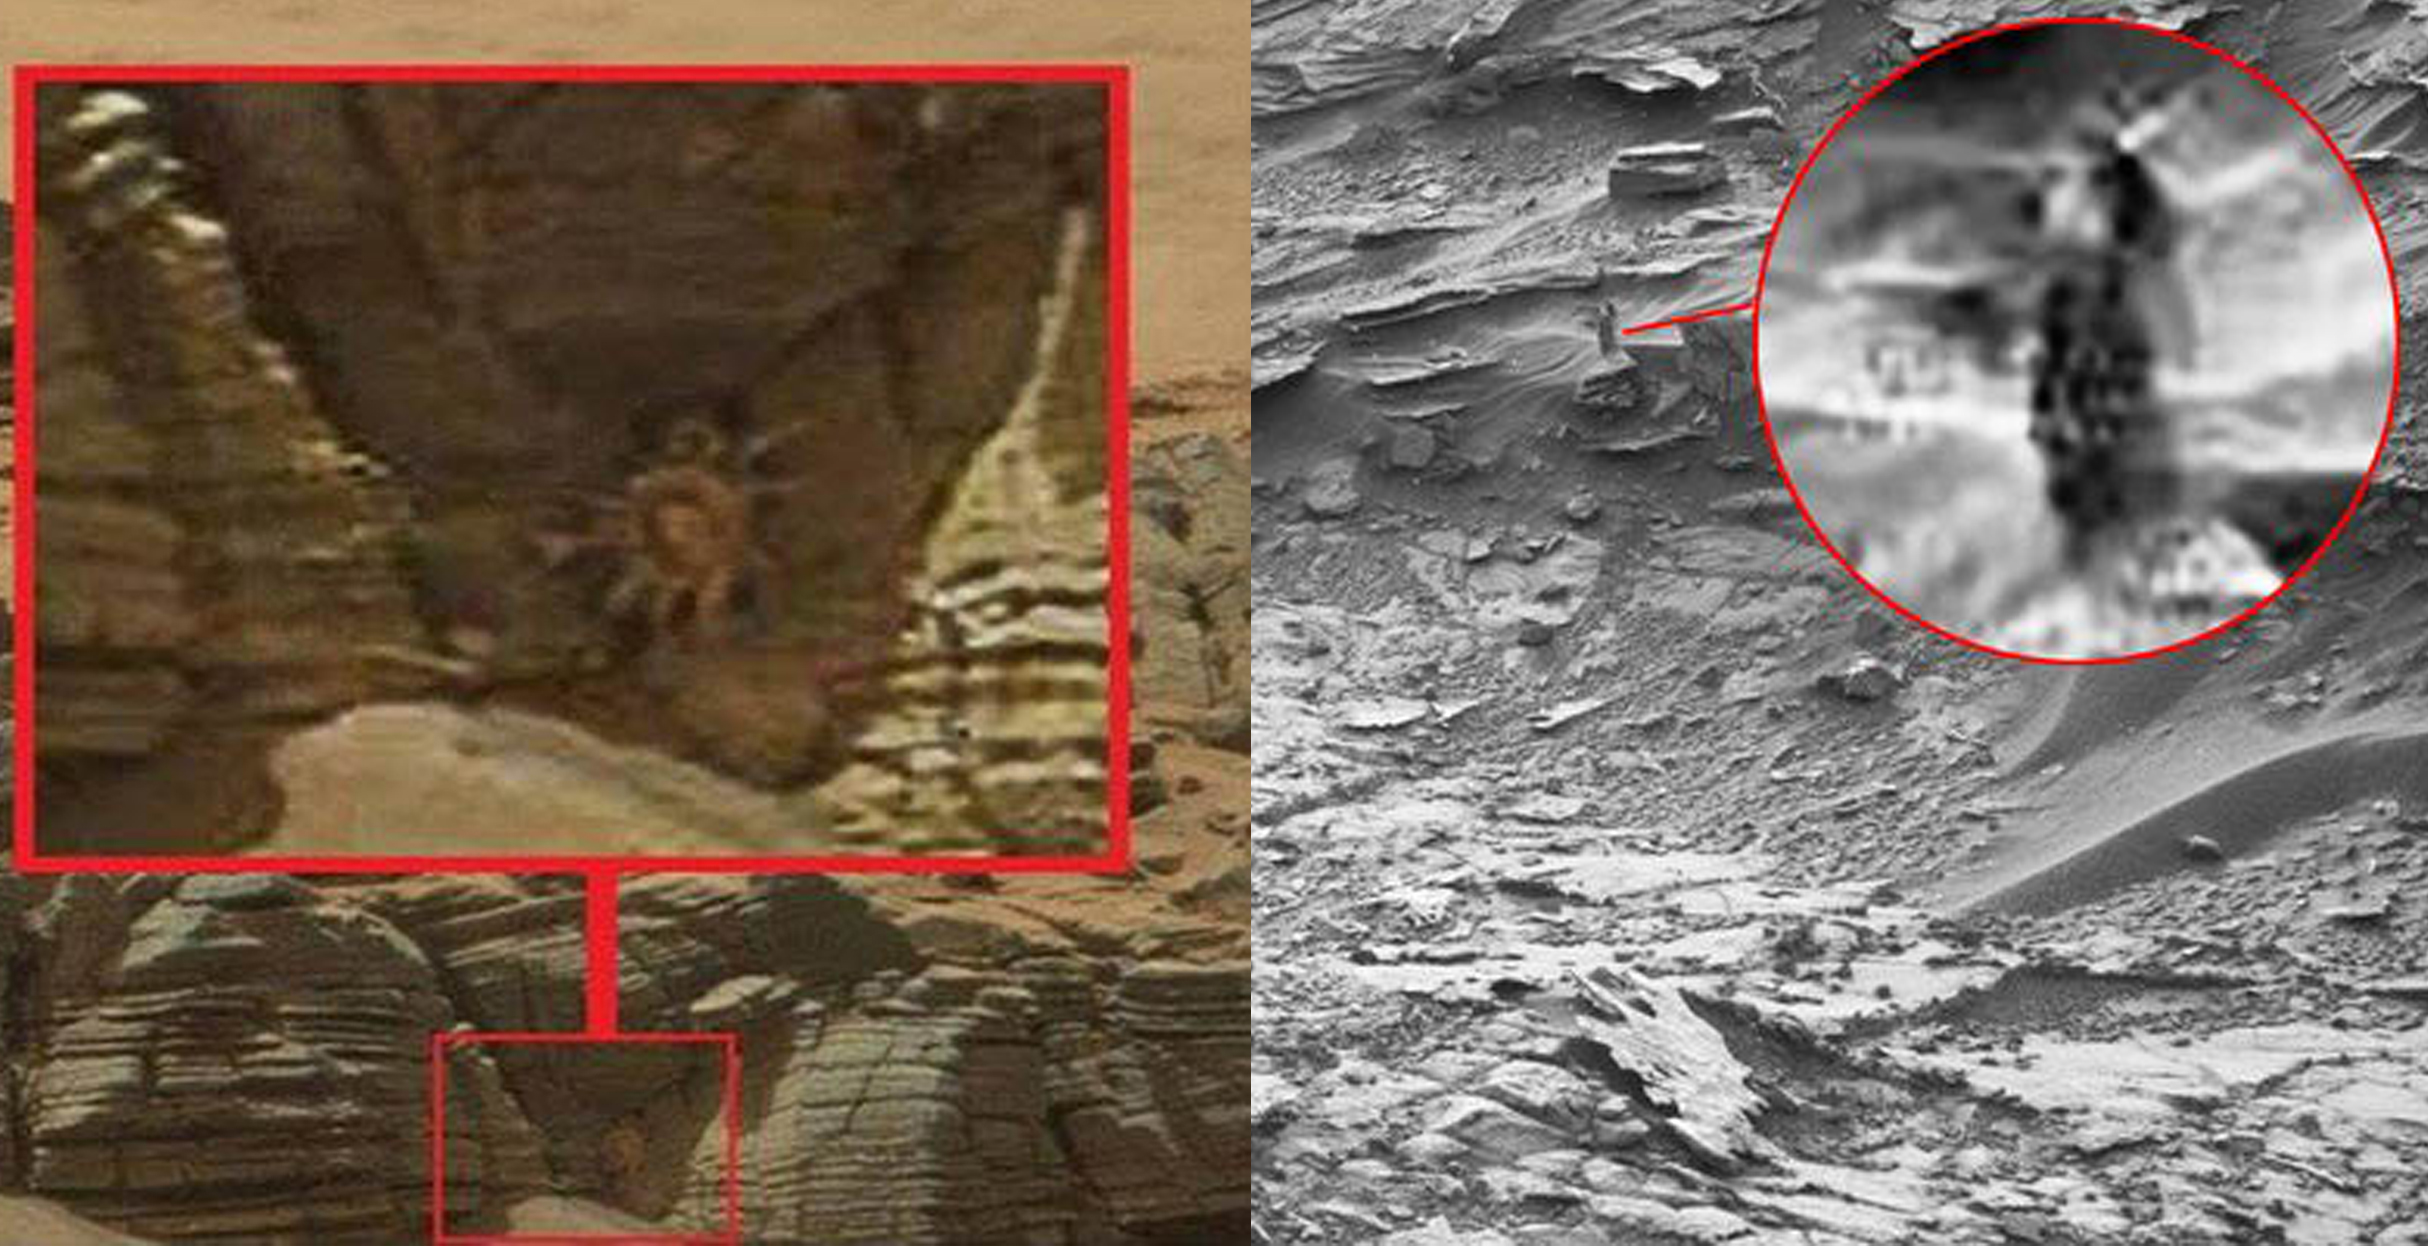 woman-like figure captured on Mars by NASA’s Curiosity rover